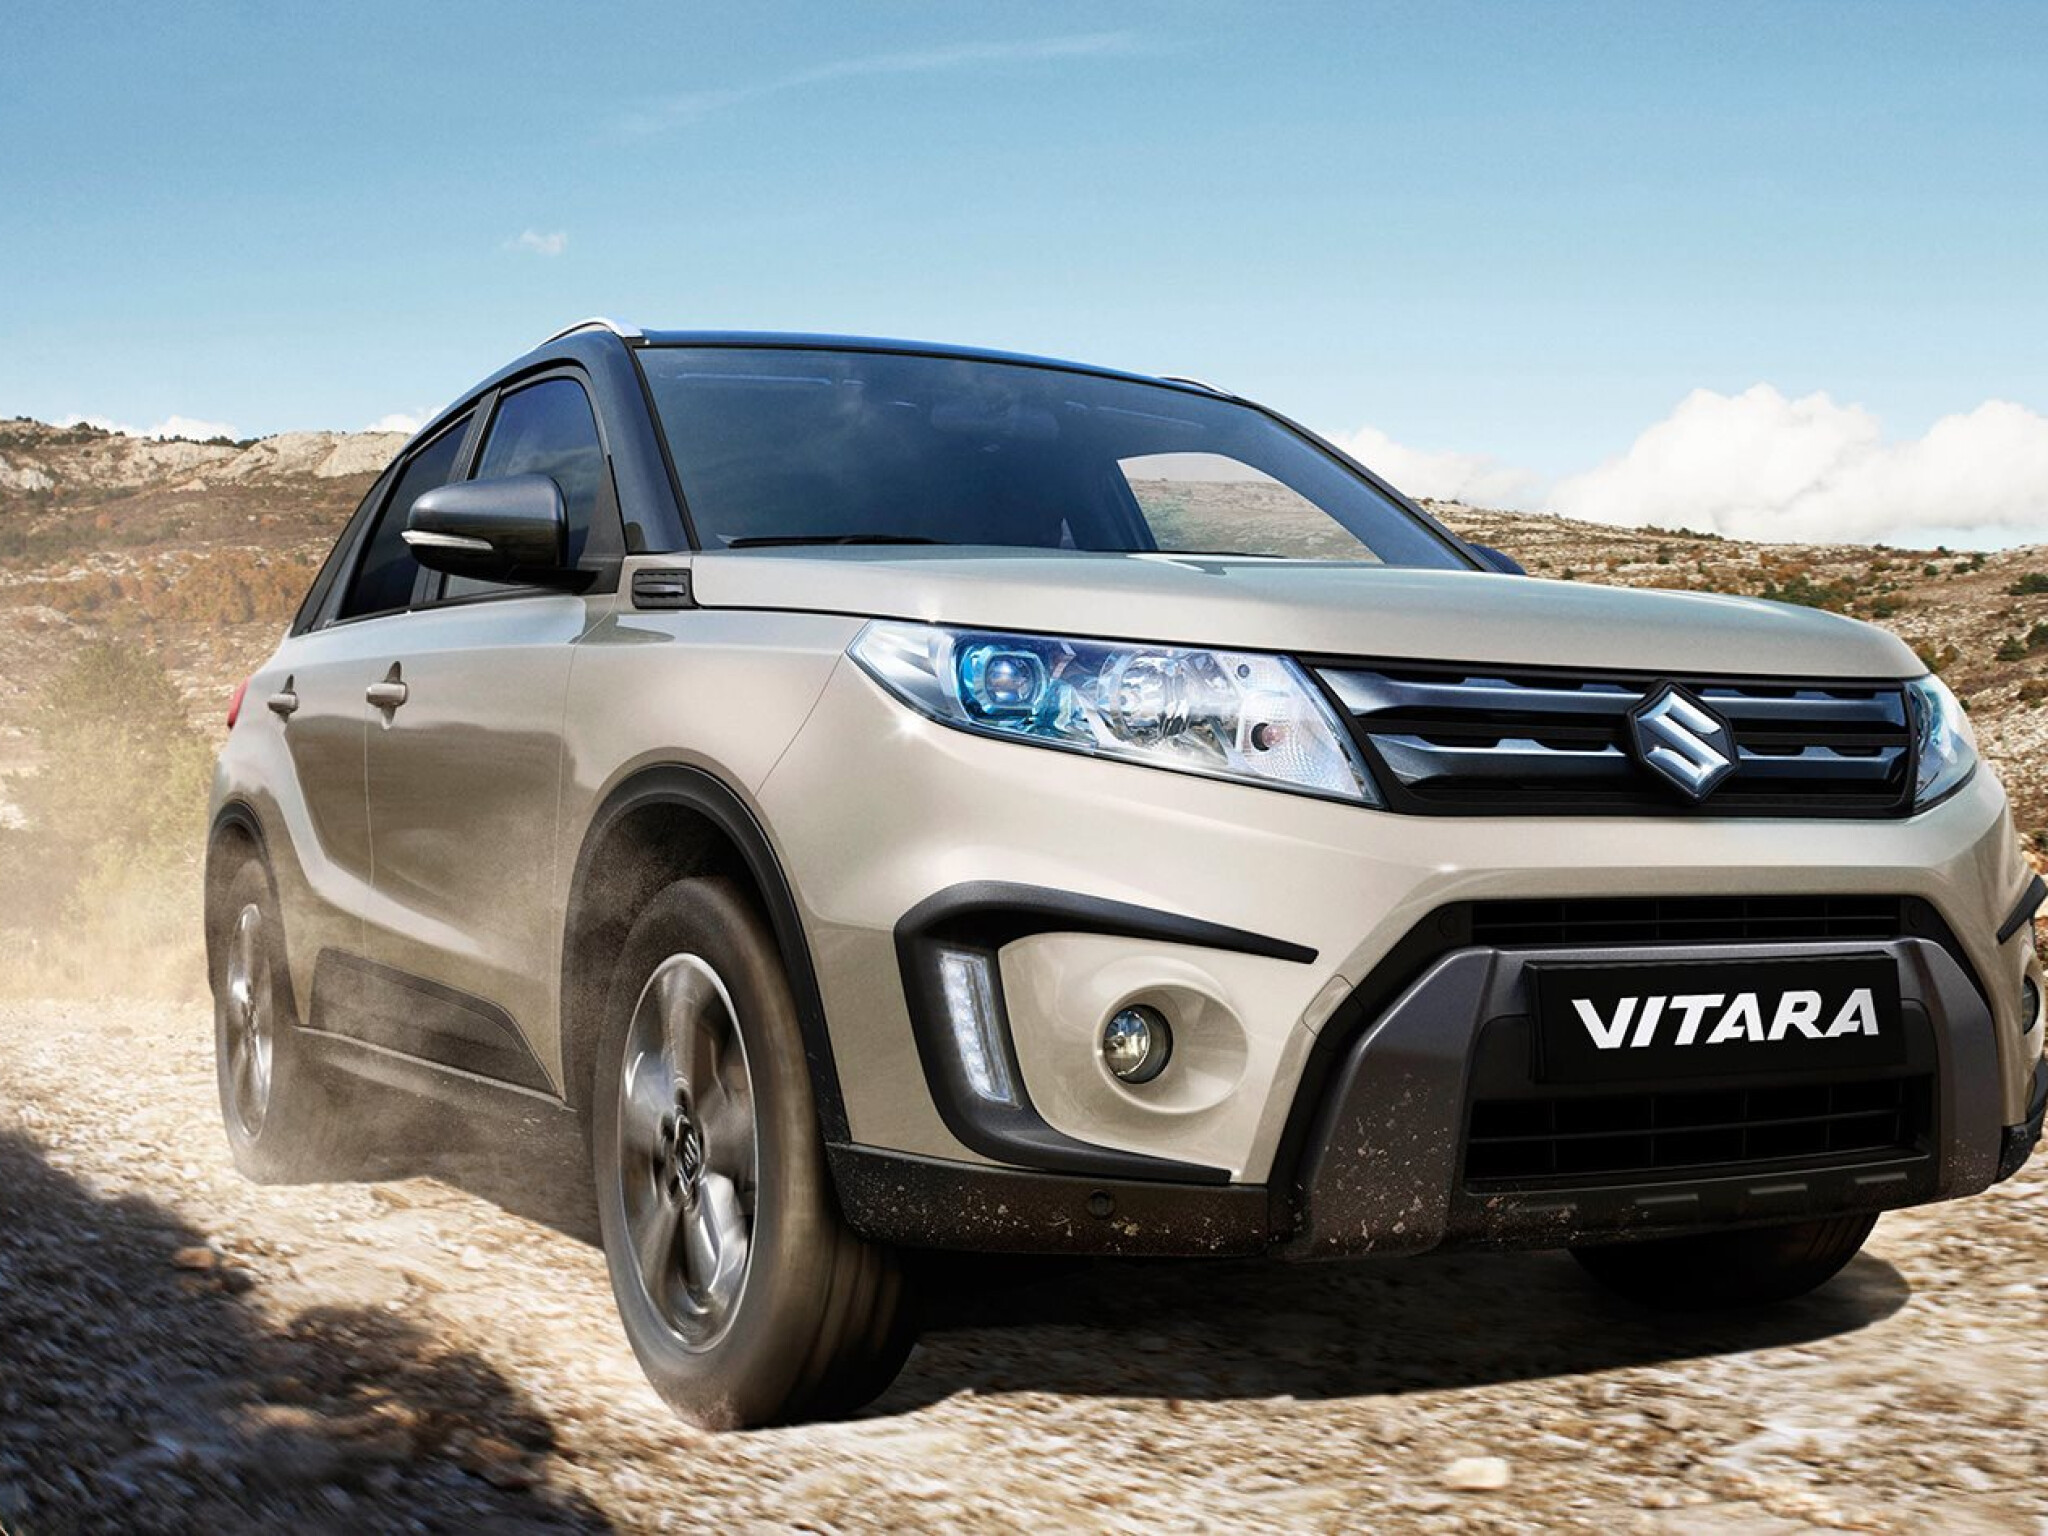 Suzuki Vitara 2019 Range Review